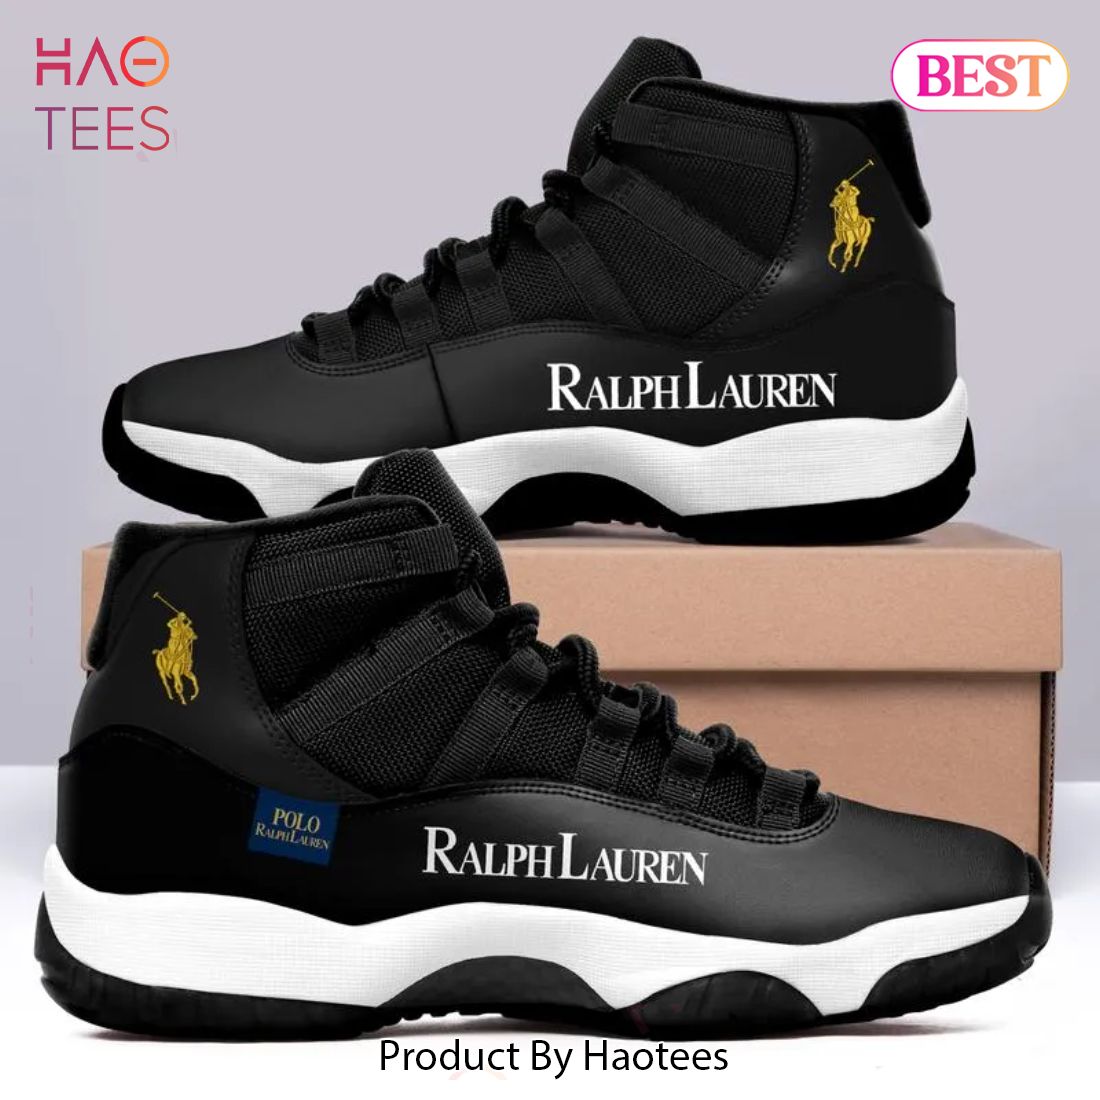 [NEW FASHION] Ralph Lauren Air Jordan 11 Sneakers Gifts For Men Women